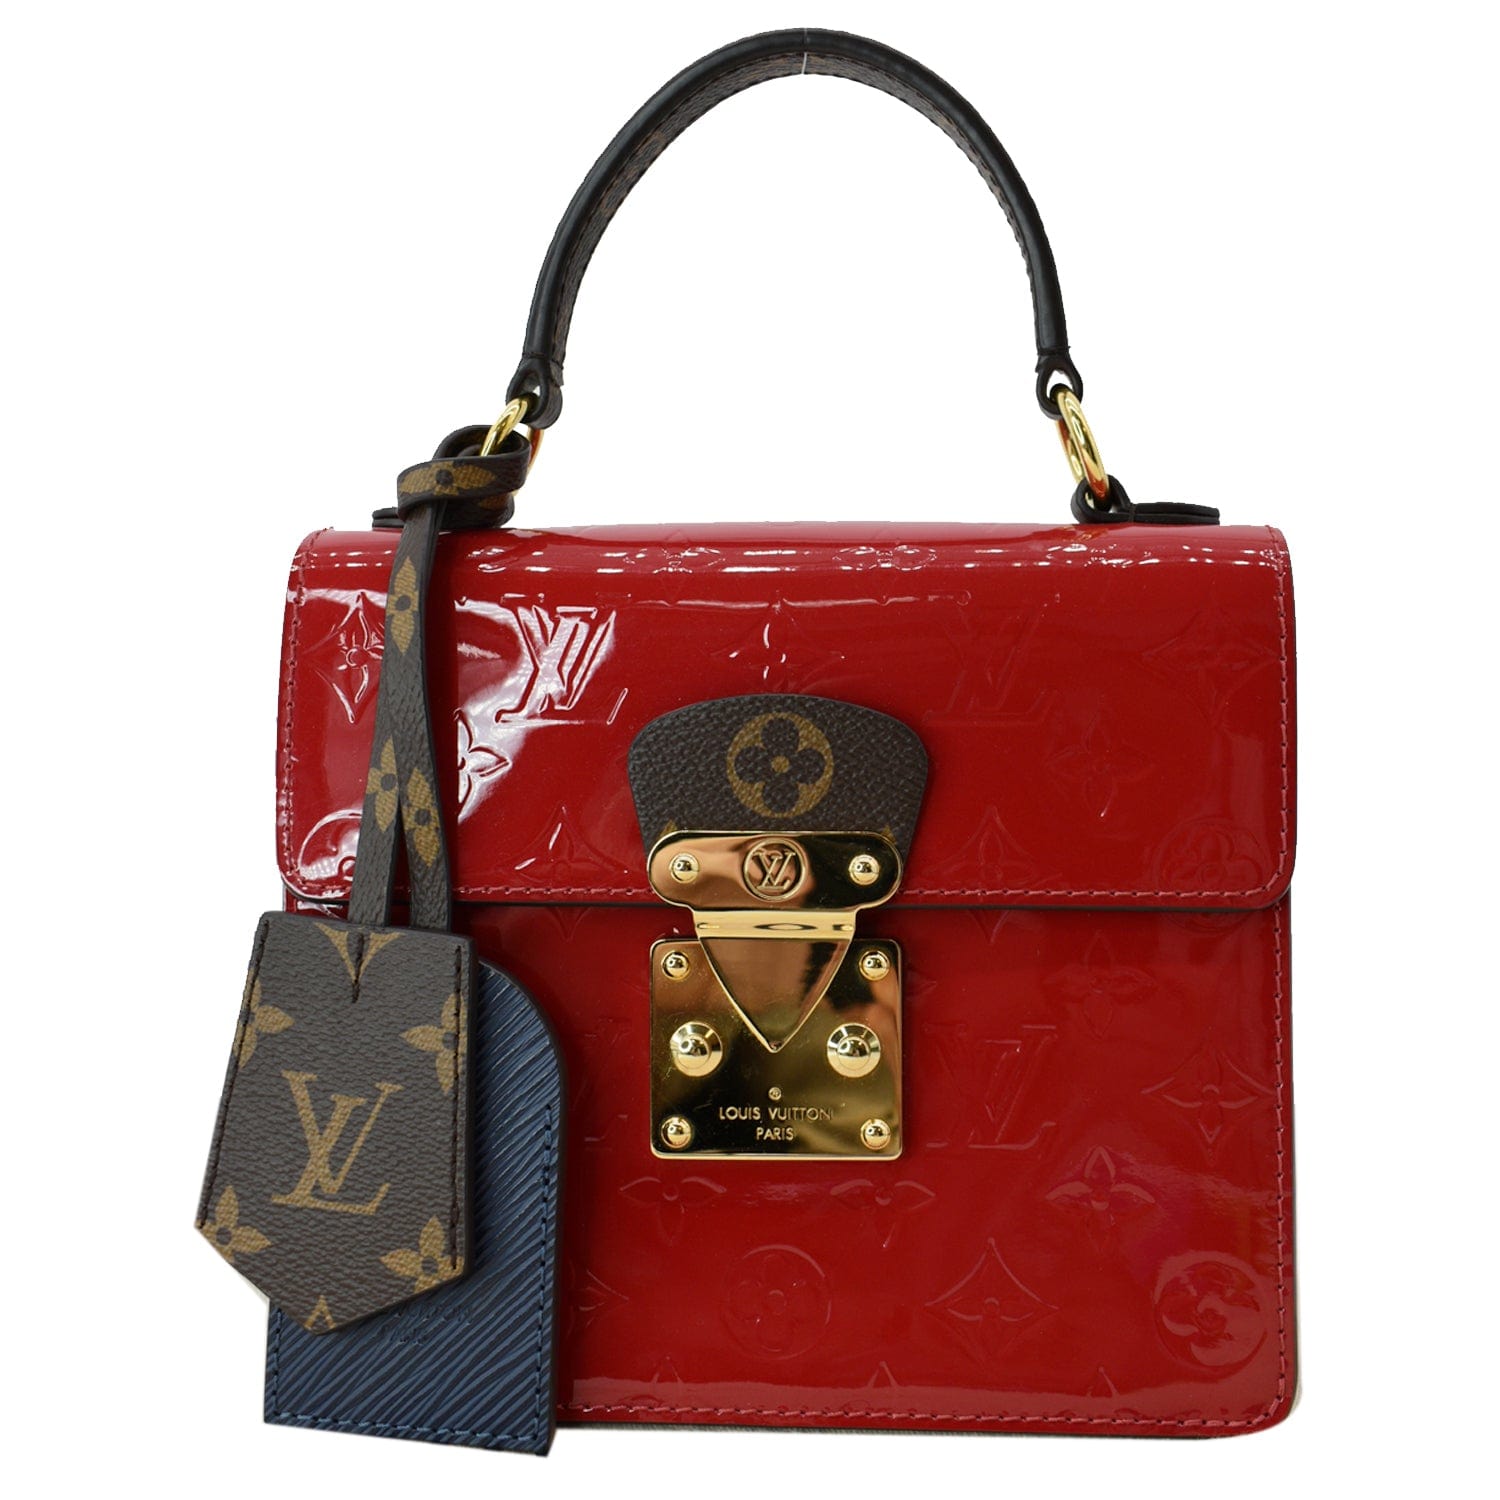 SALE! Louis Vuitton Spring Street vernis bag